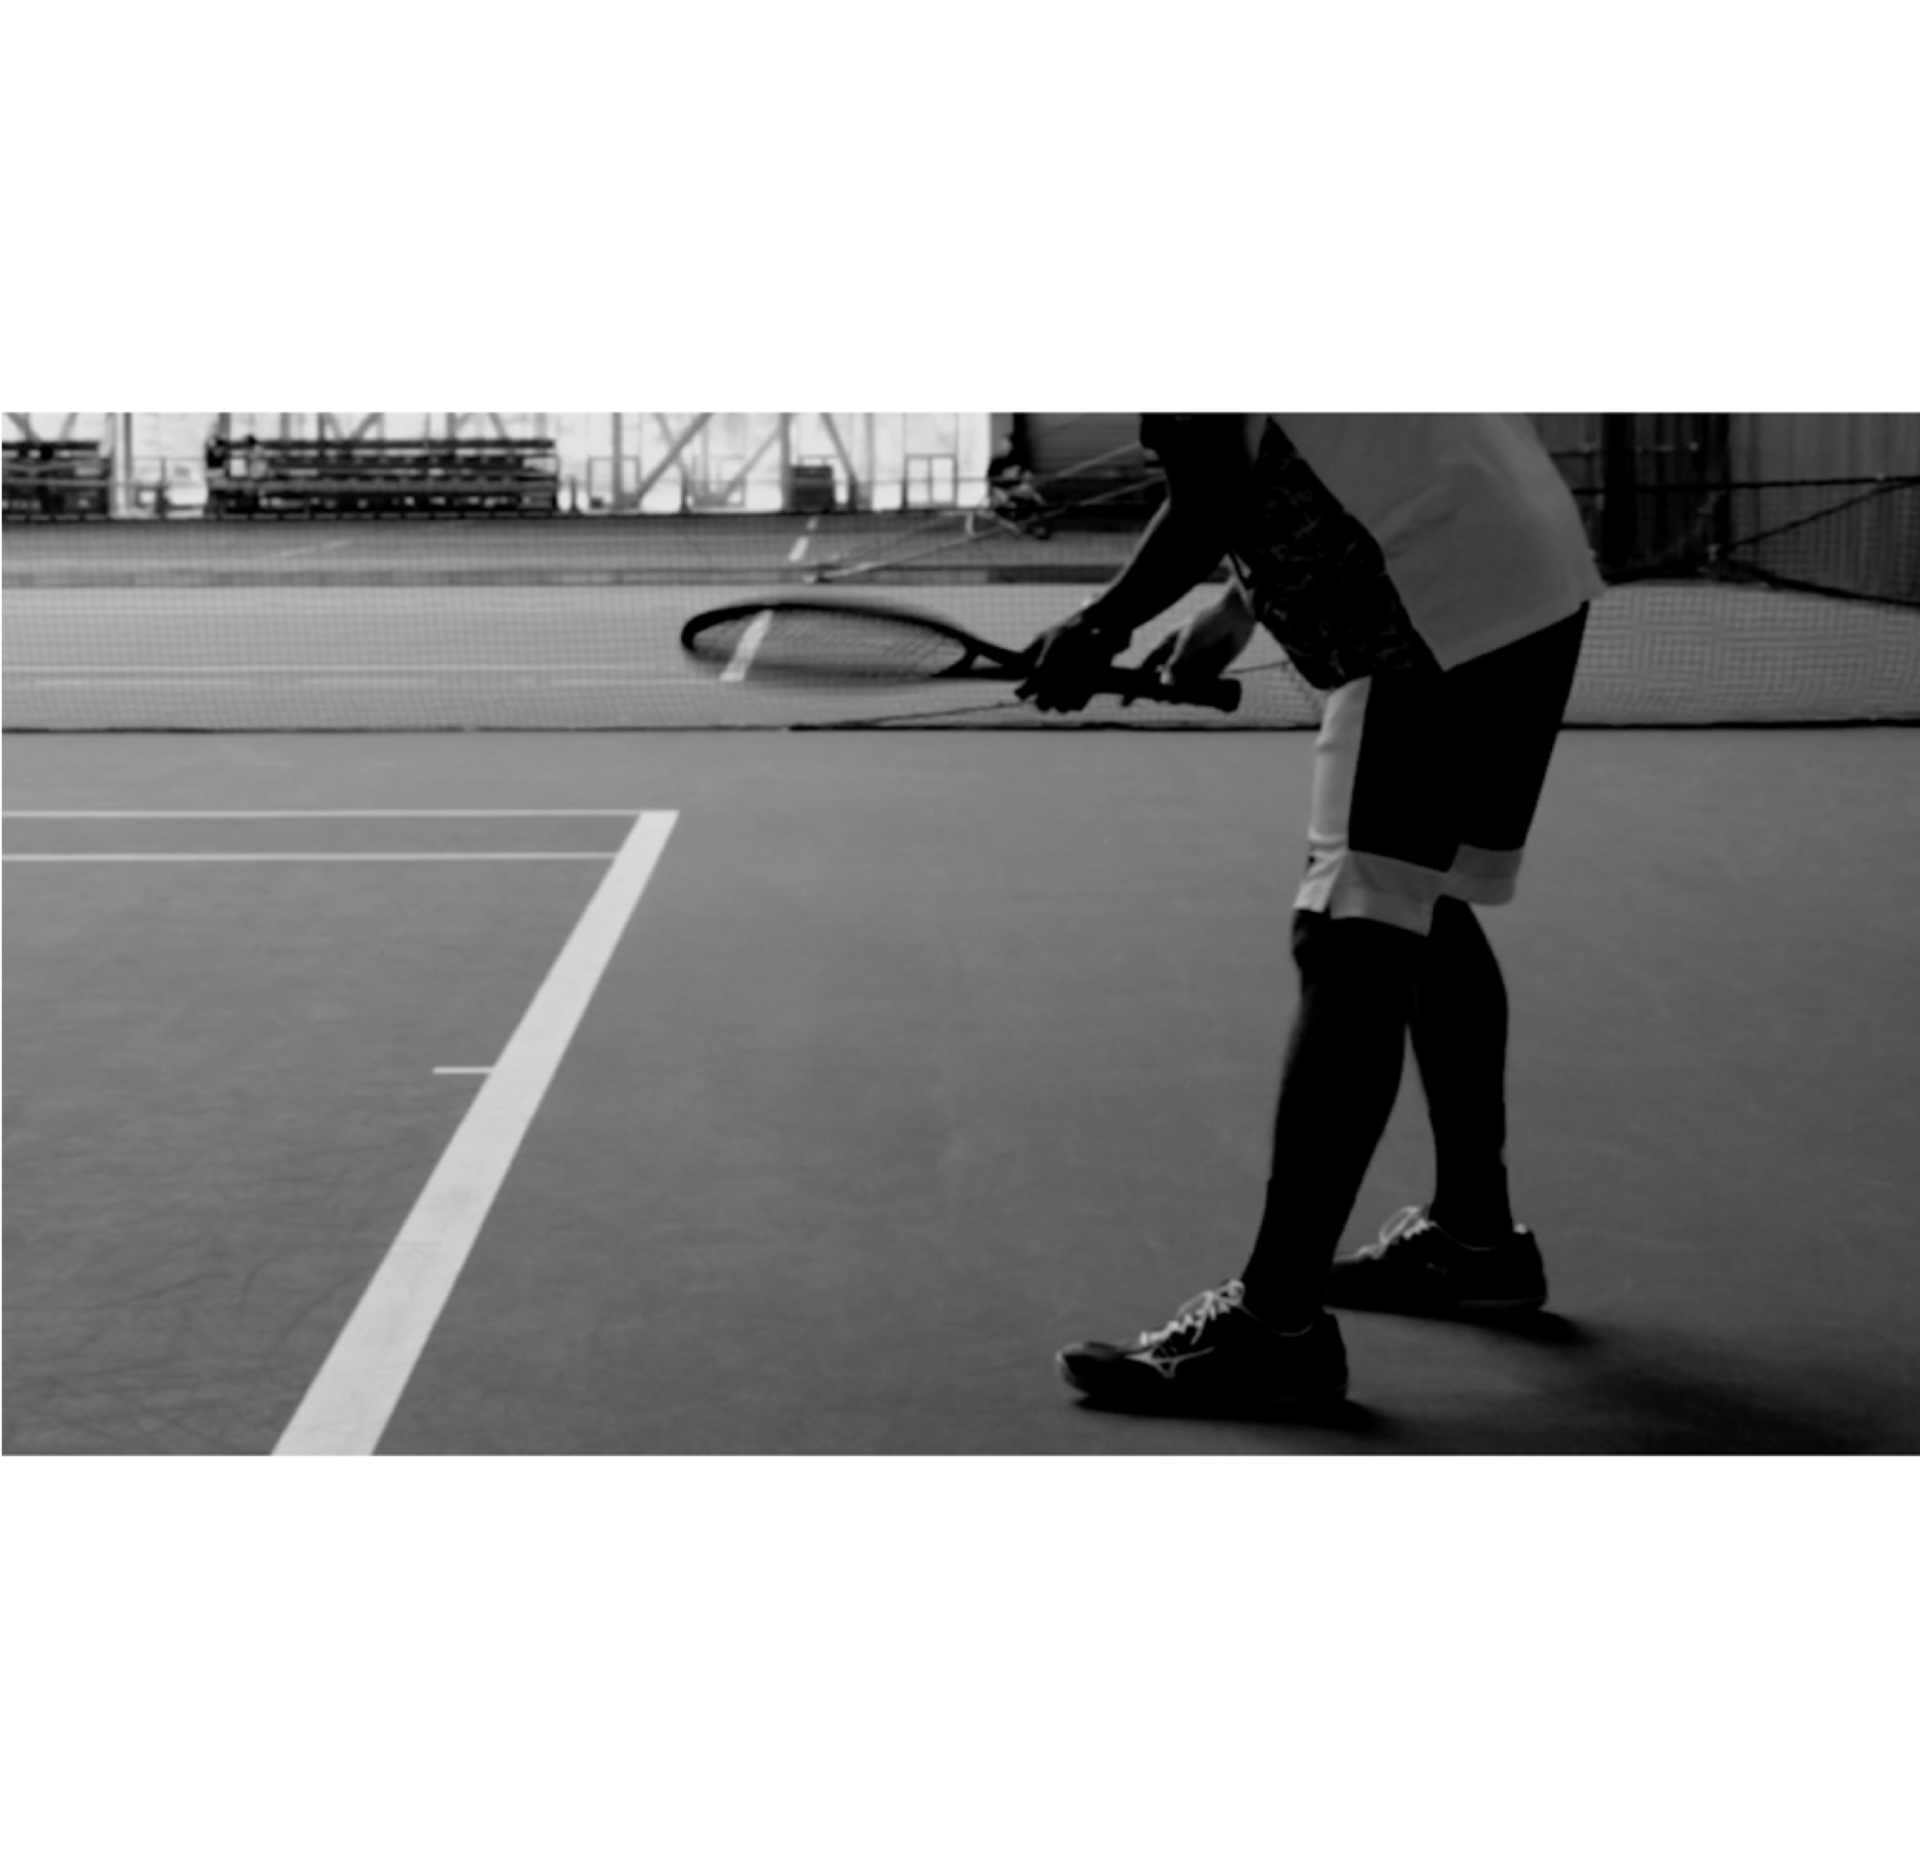 Toalson S-MACH PRO テニスラケットプロモーションビデオ